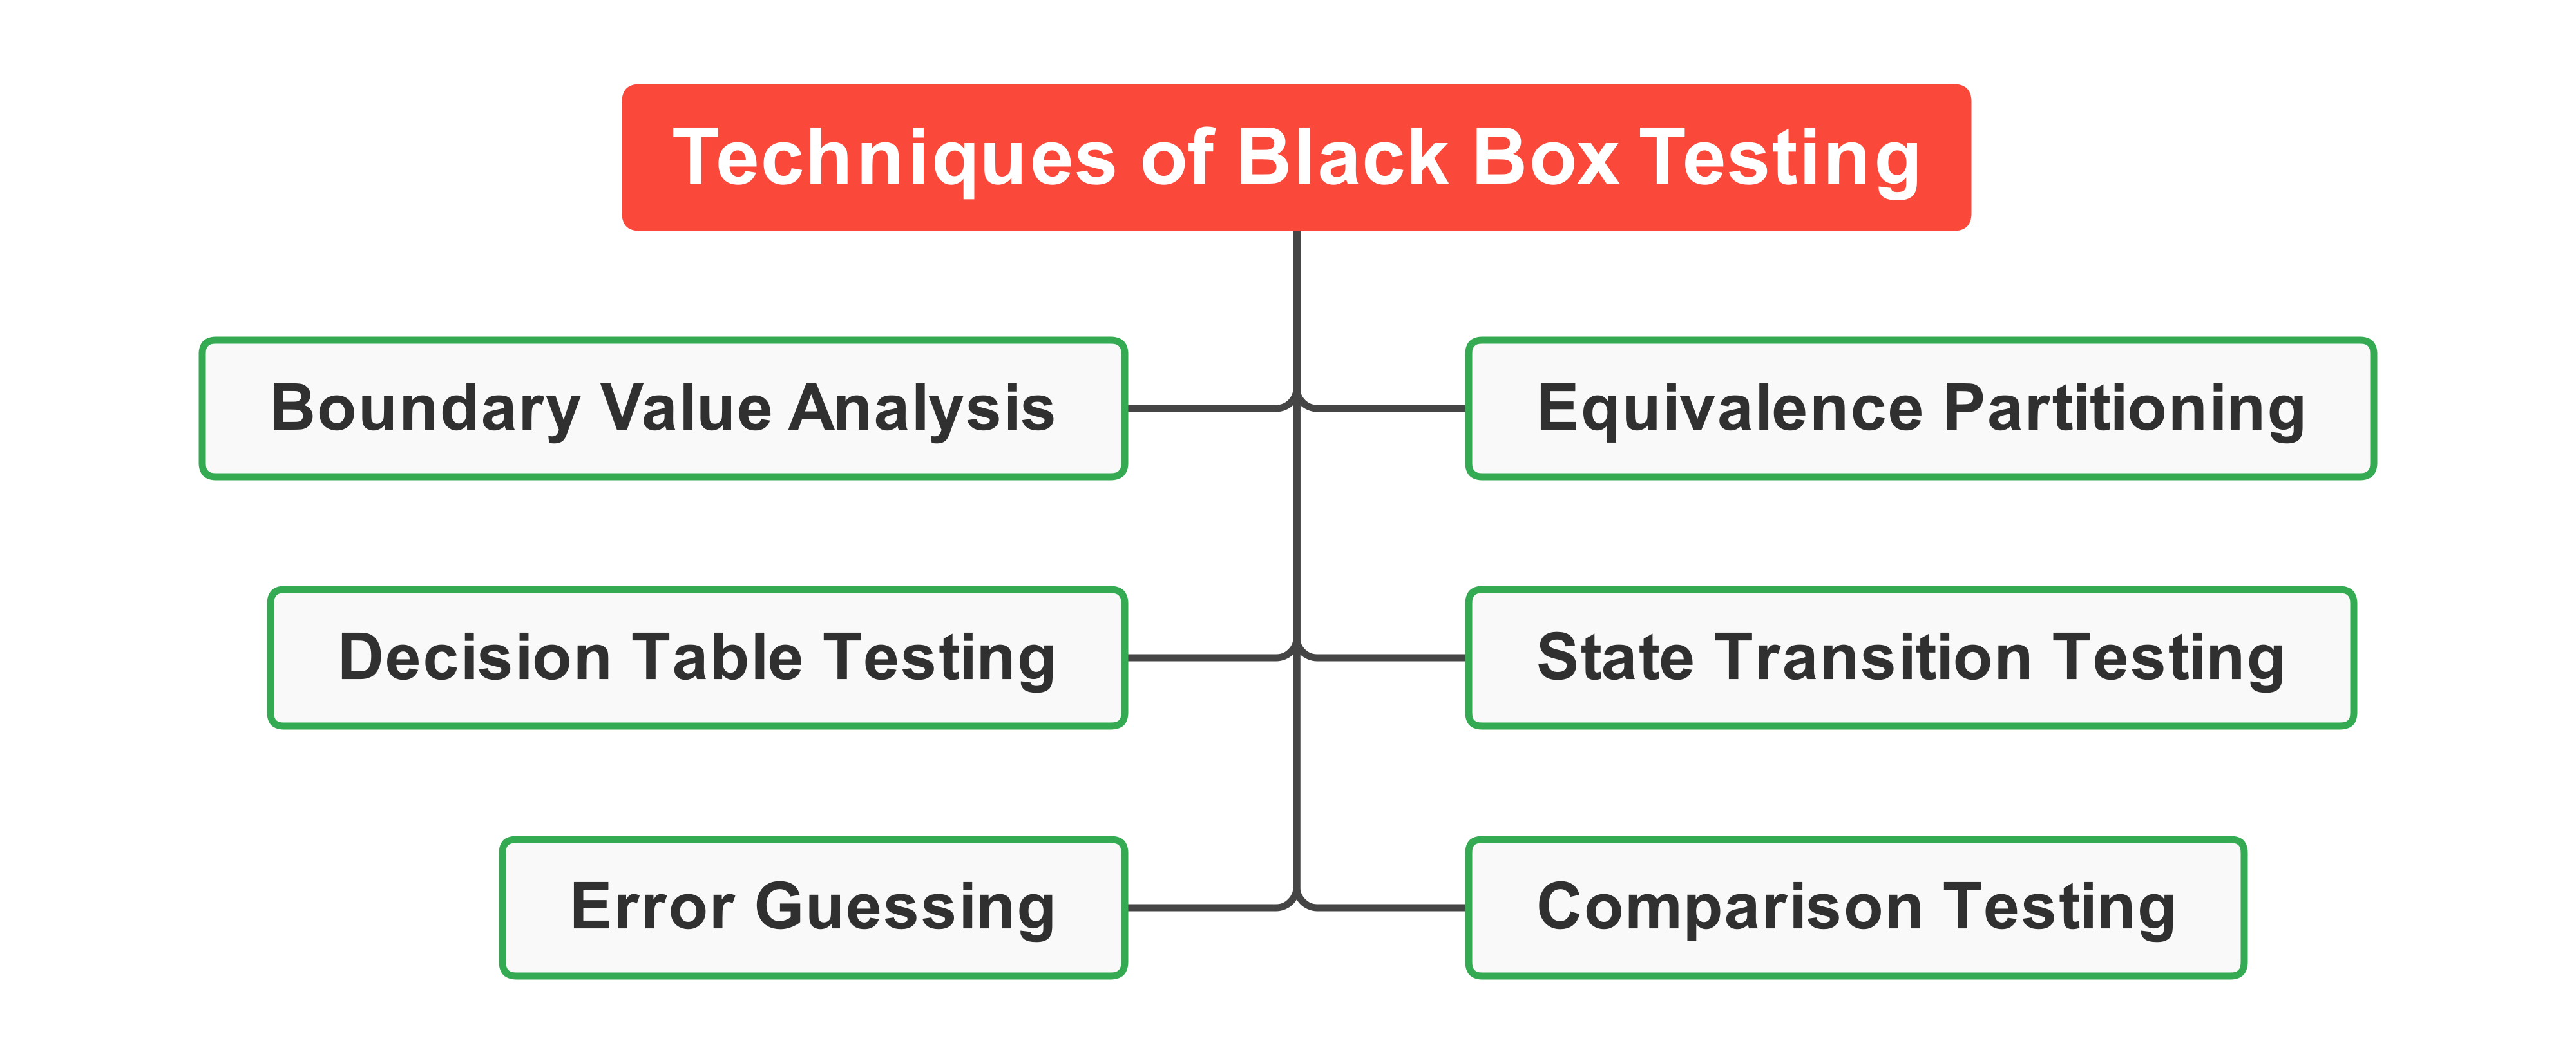 Techniques of Black Box Testing